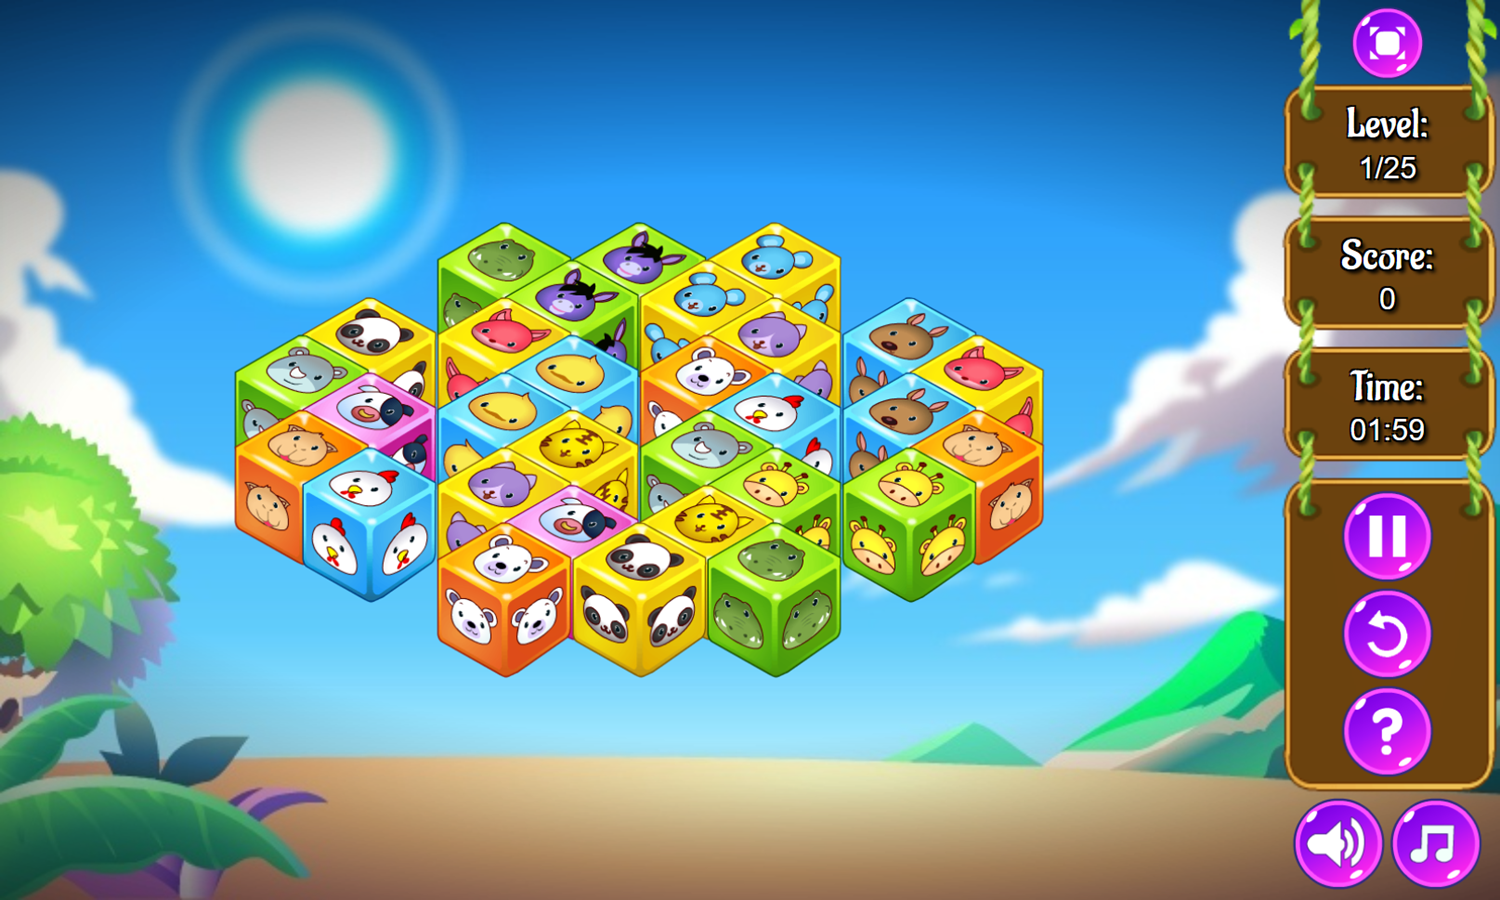 Cube Zoobies Game Level Start Screenshot.